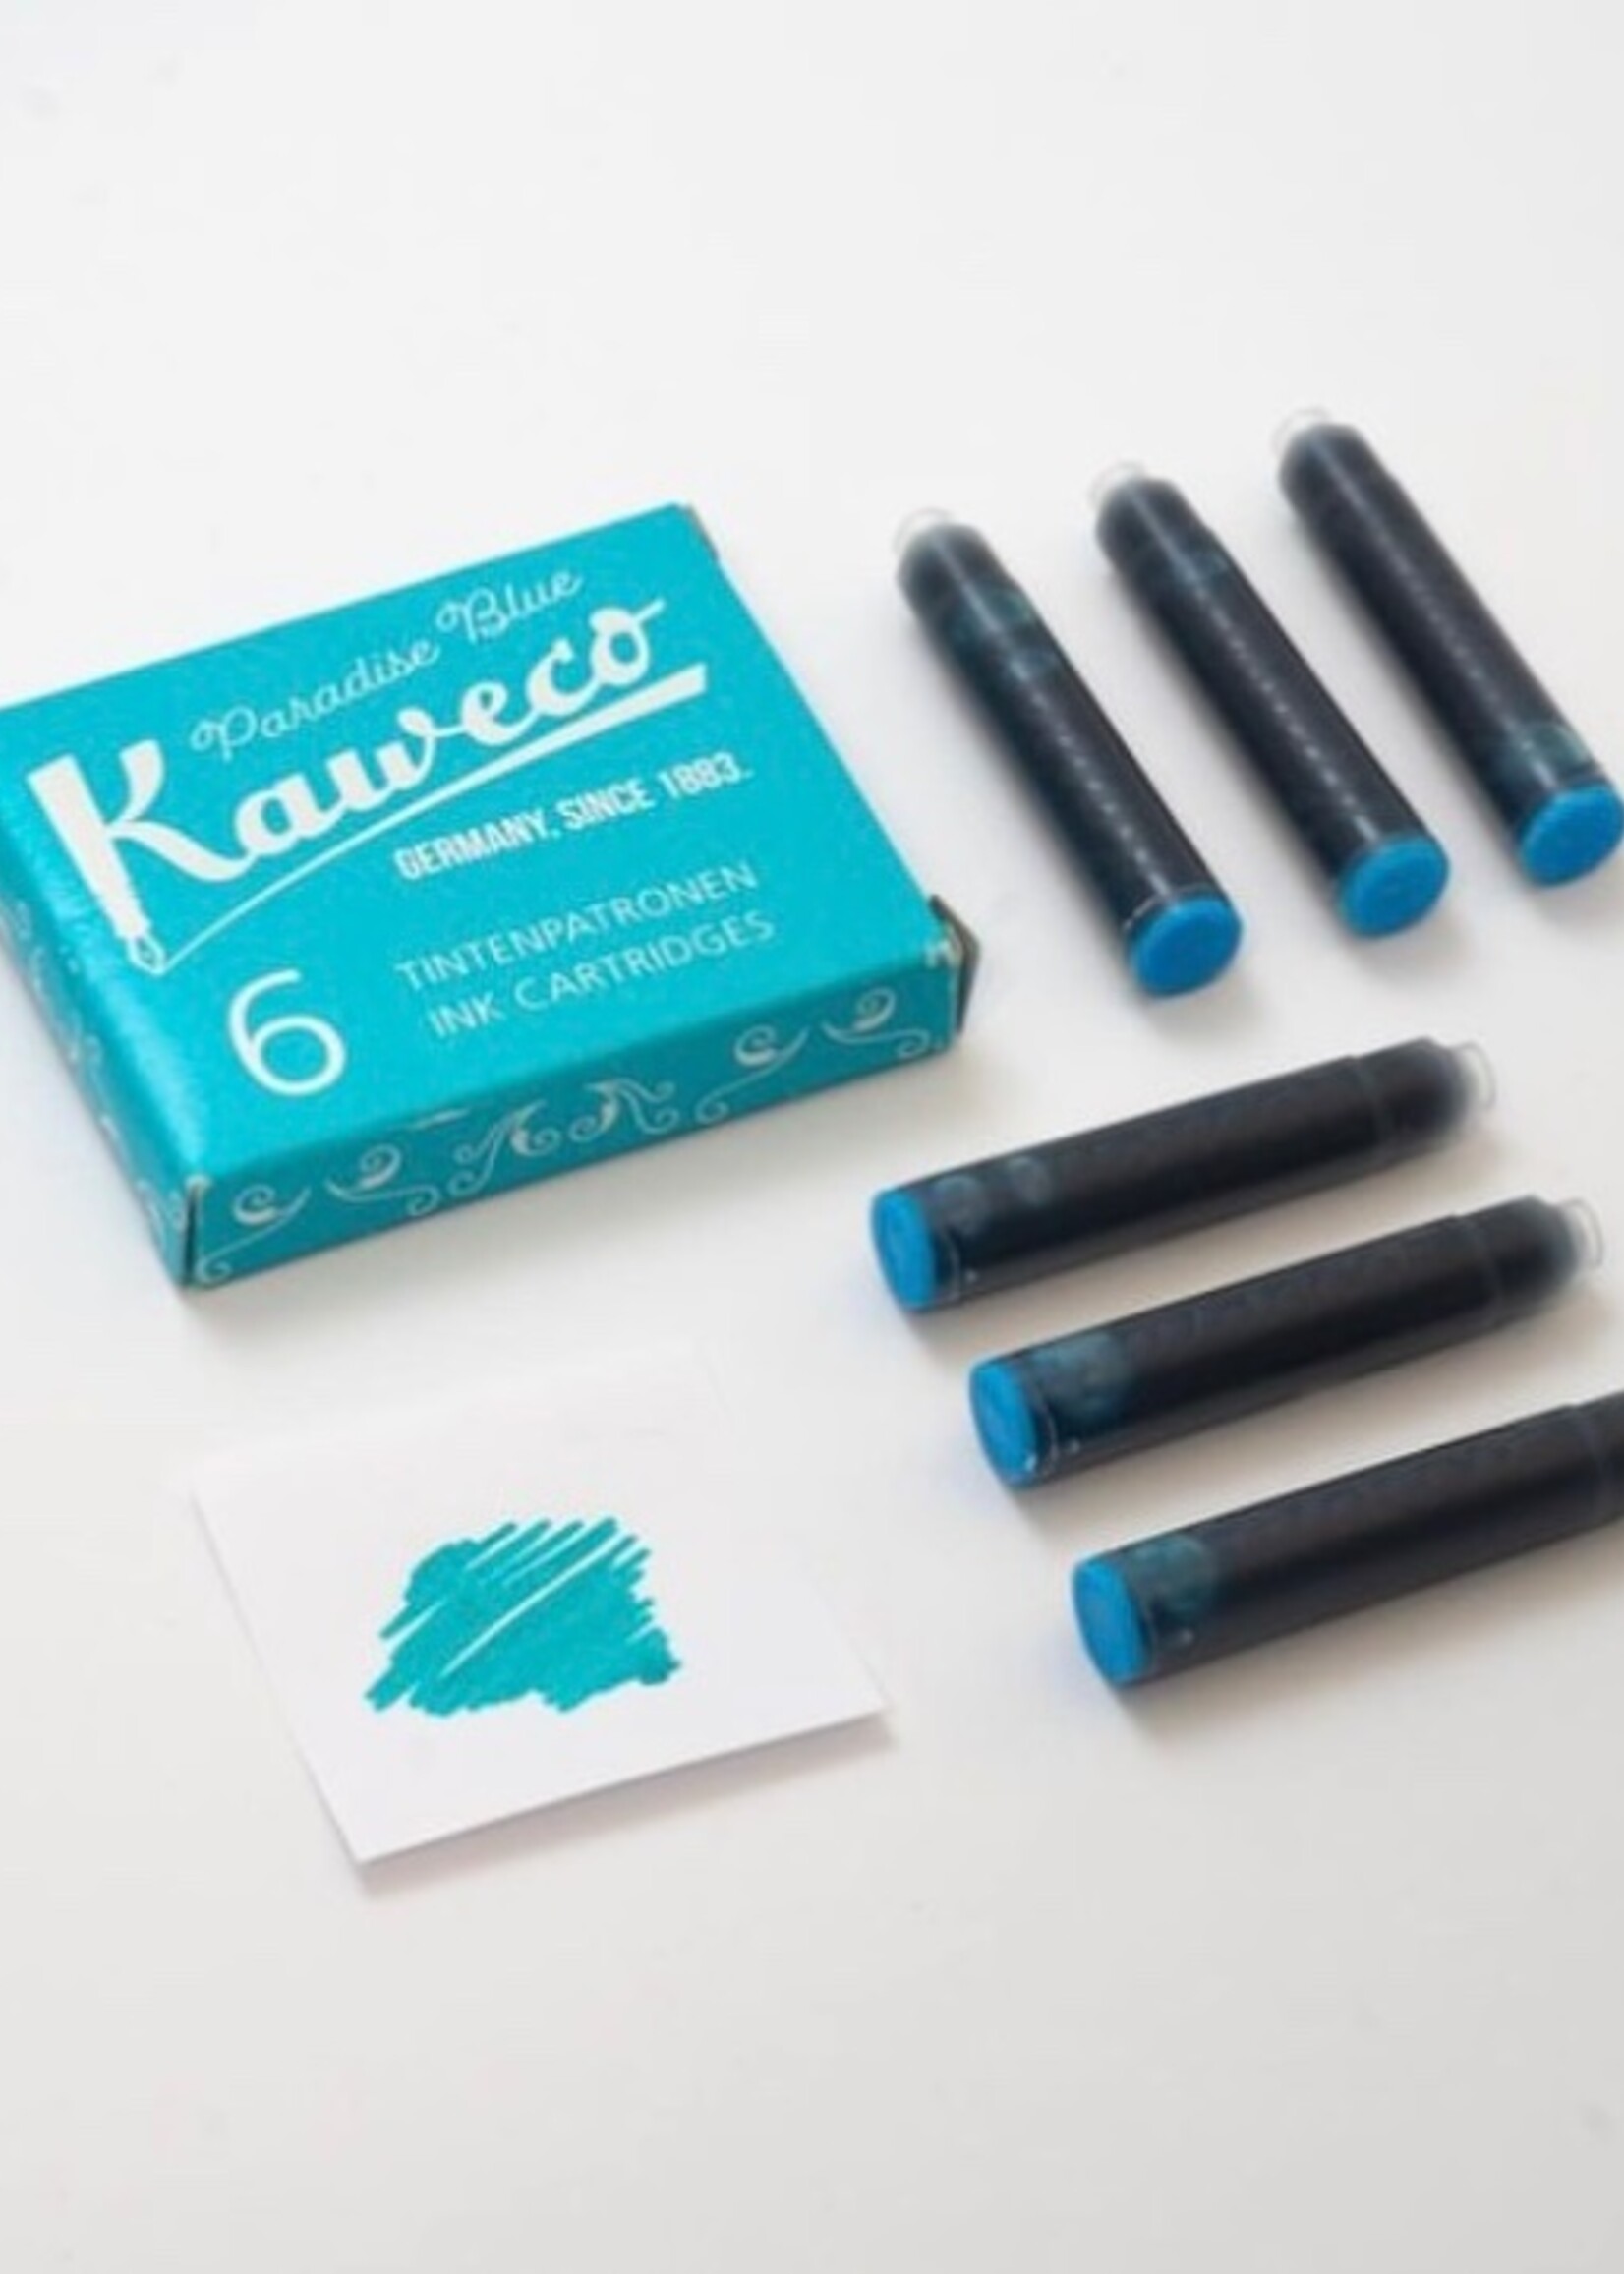 Kaweco Inkt Vullingen verp./6  Paradise Blue Turquoise